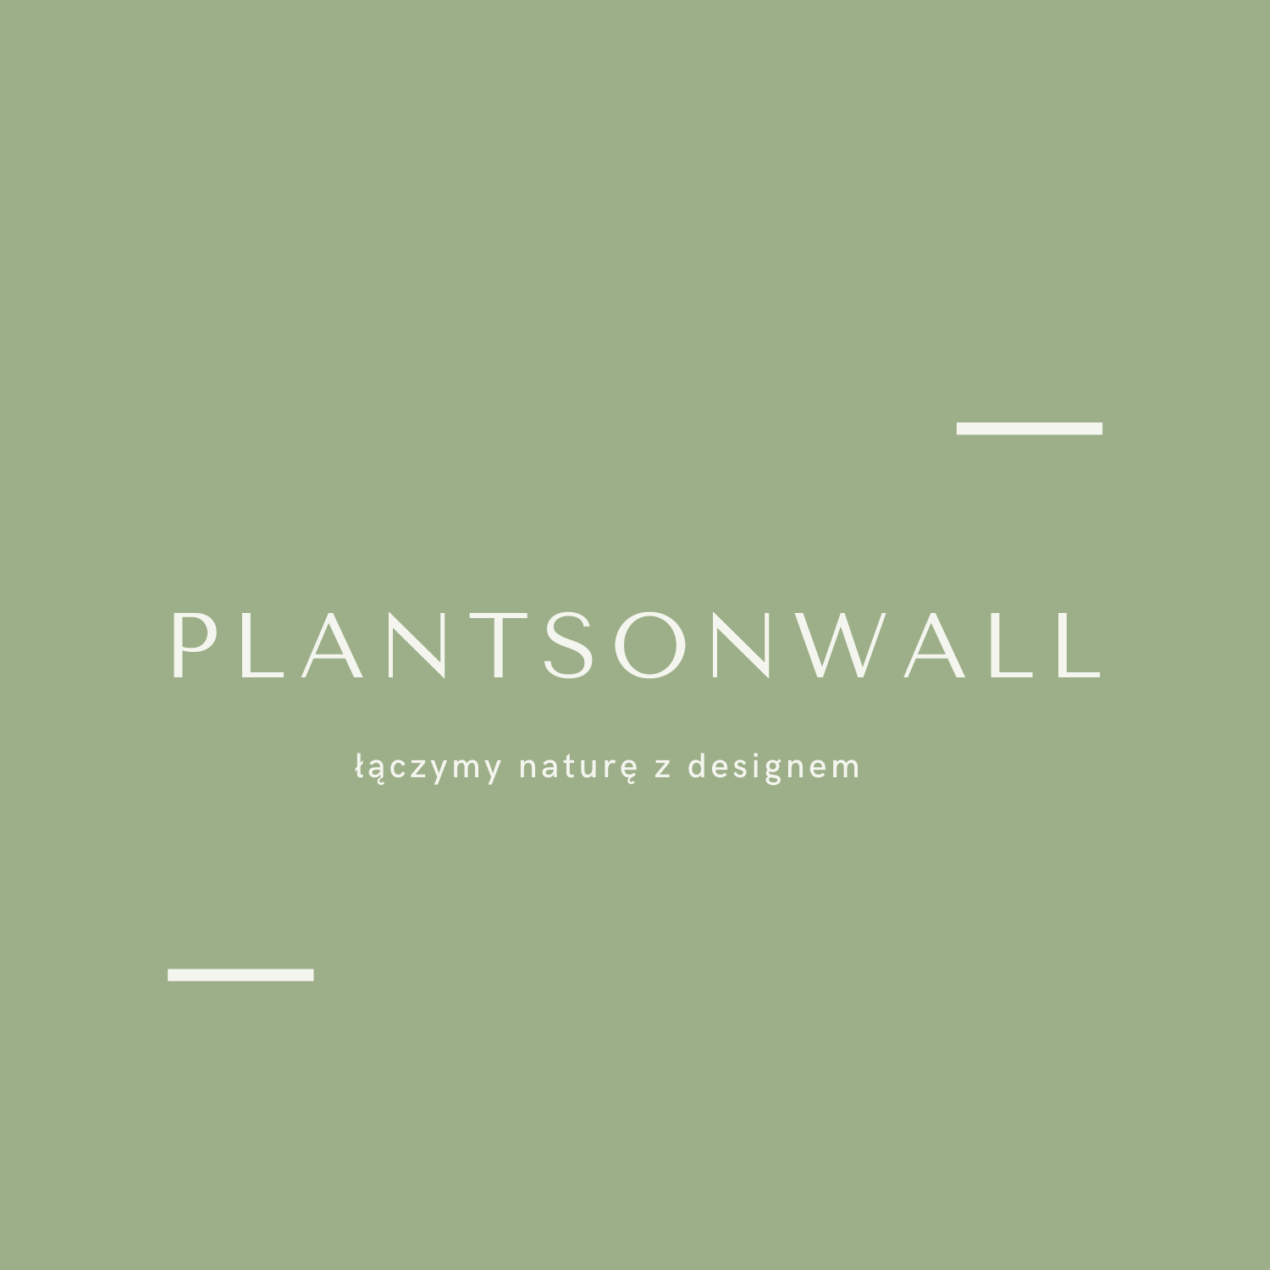 Plantsonwall